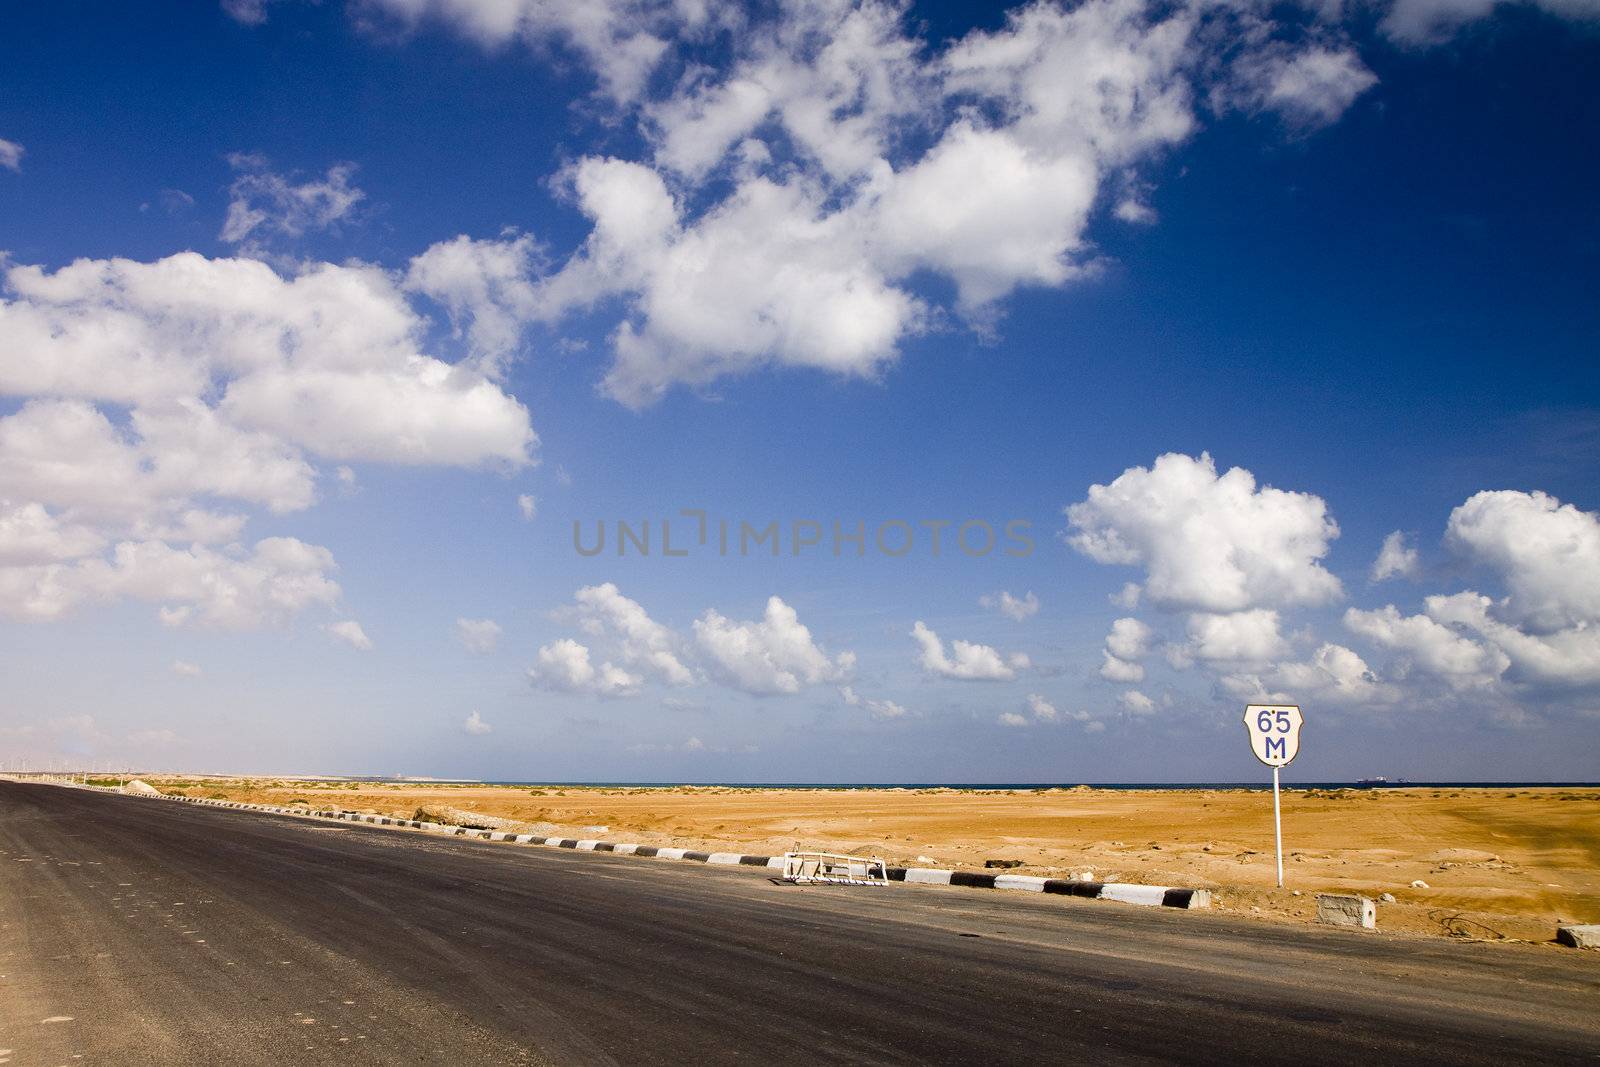 The road in the desert near sea